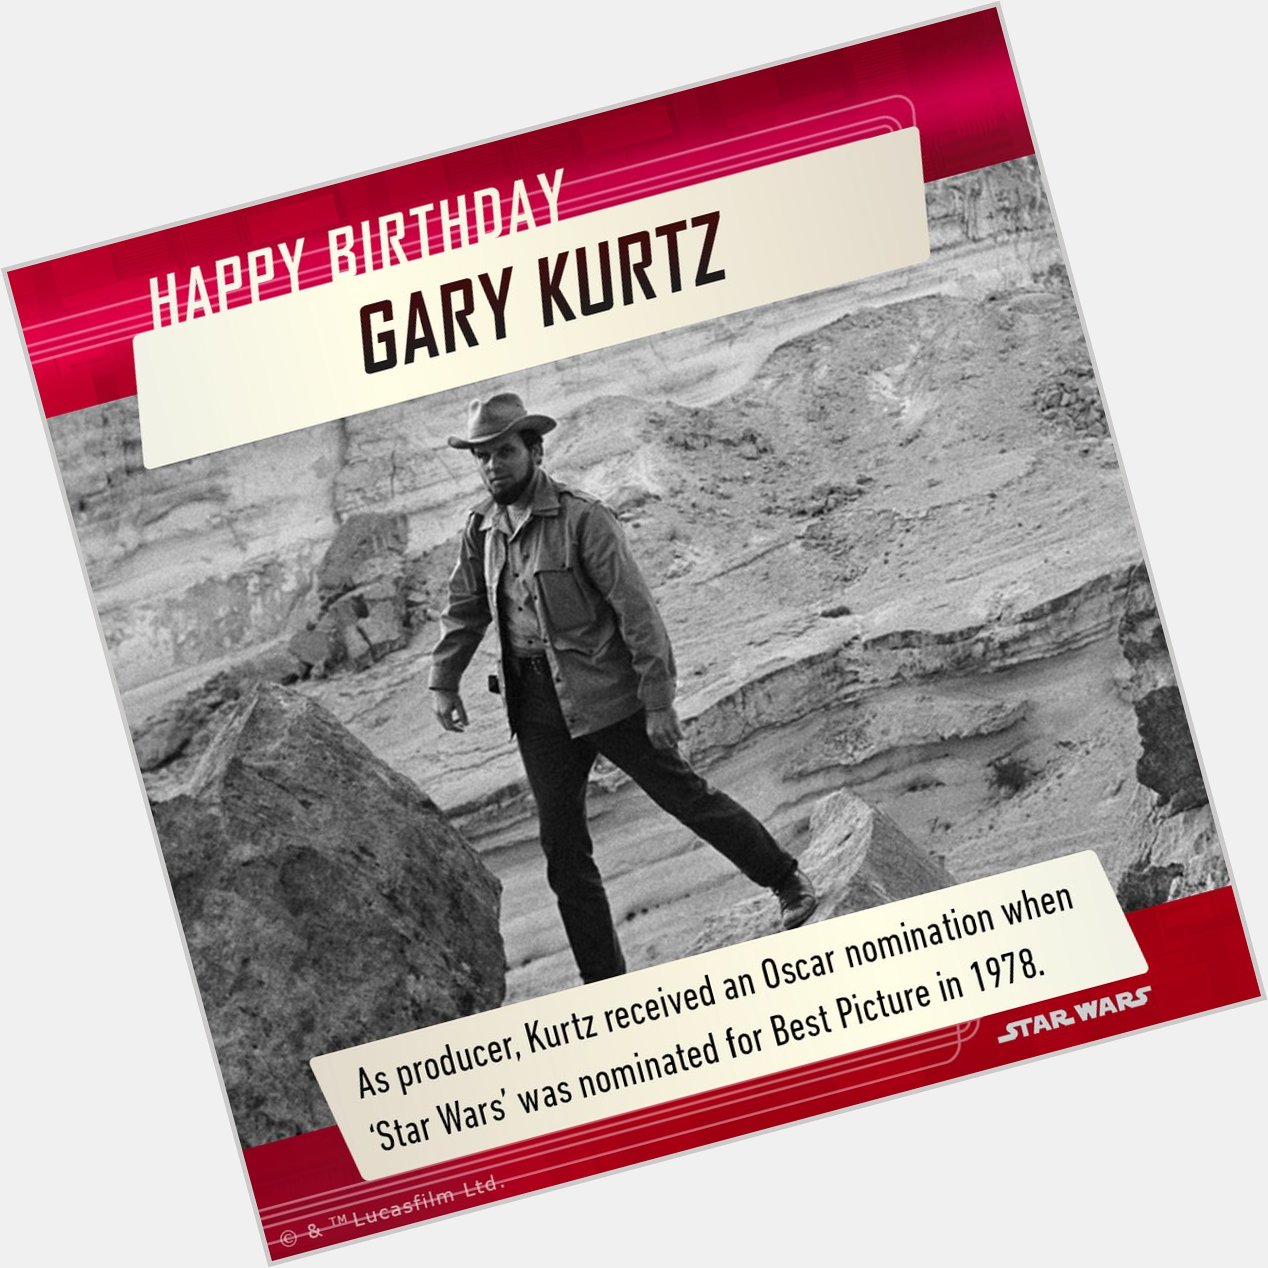 Happy Birthday Gary Kurtz!  